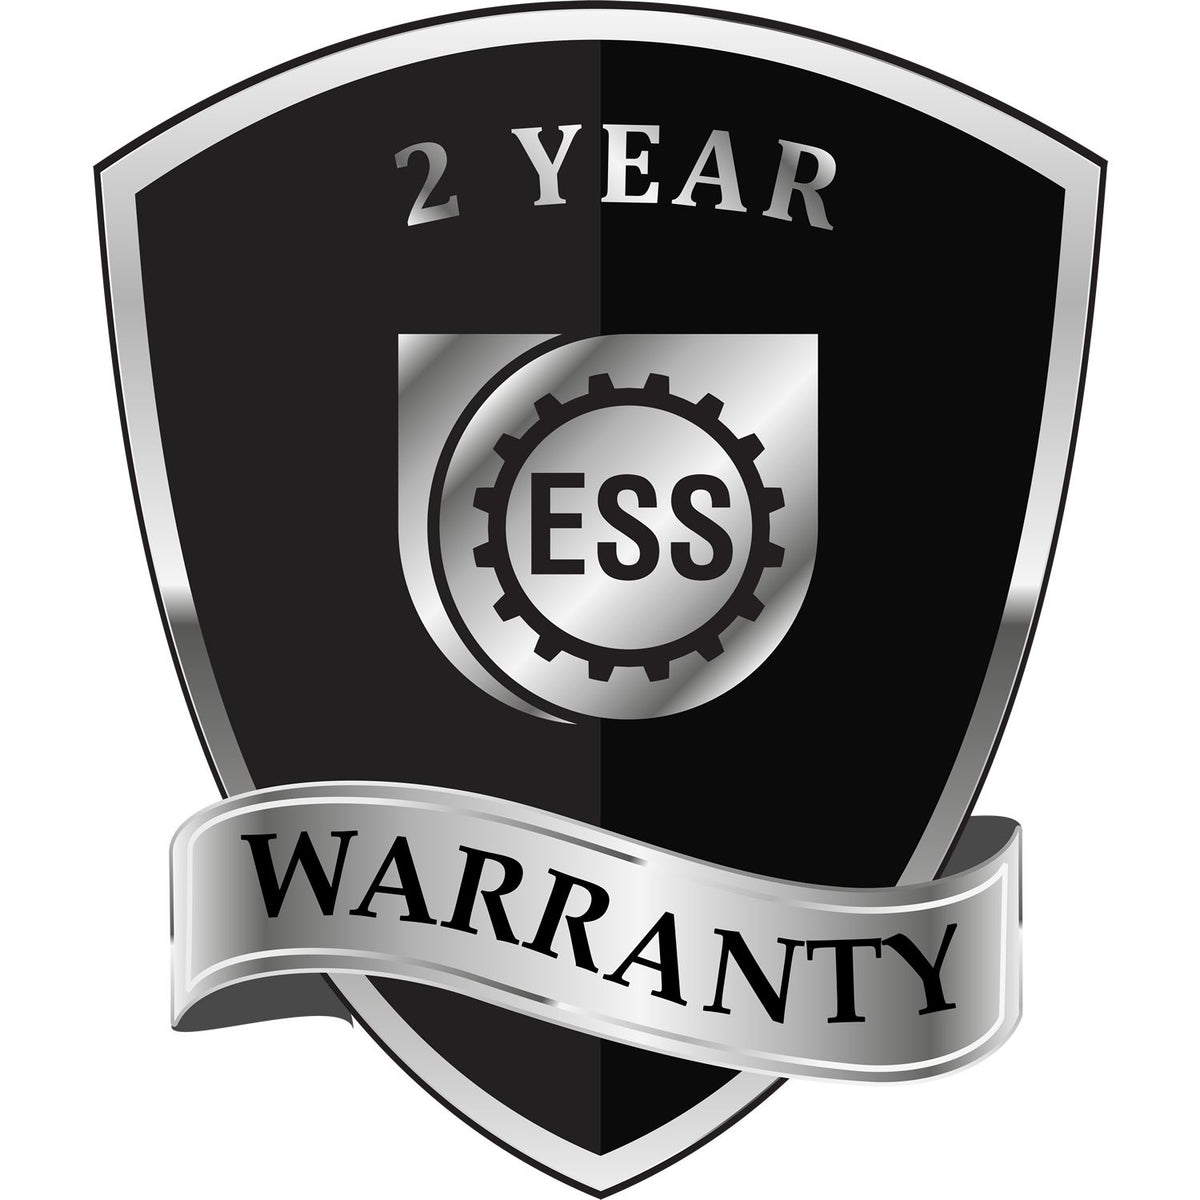 A badge or emblem showing a warranty icon for the Long Reach Colorado Land Surveyor Seal